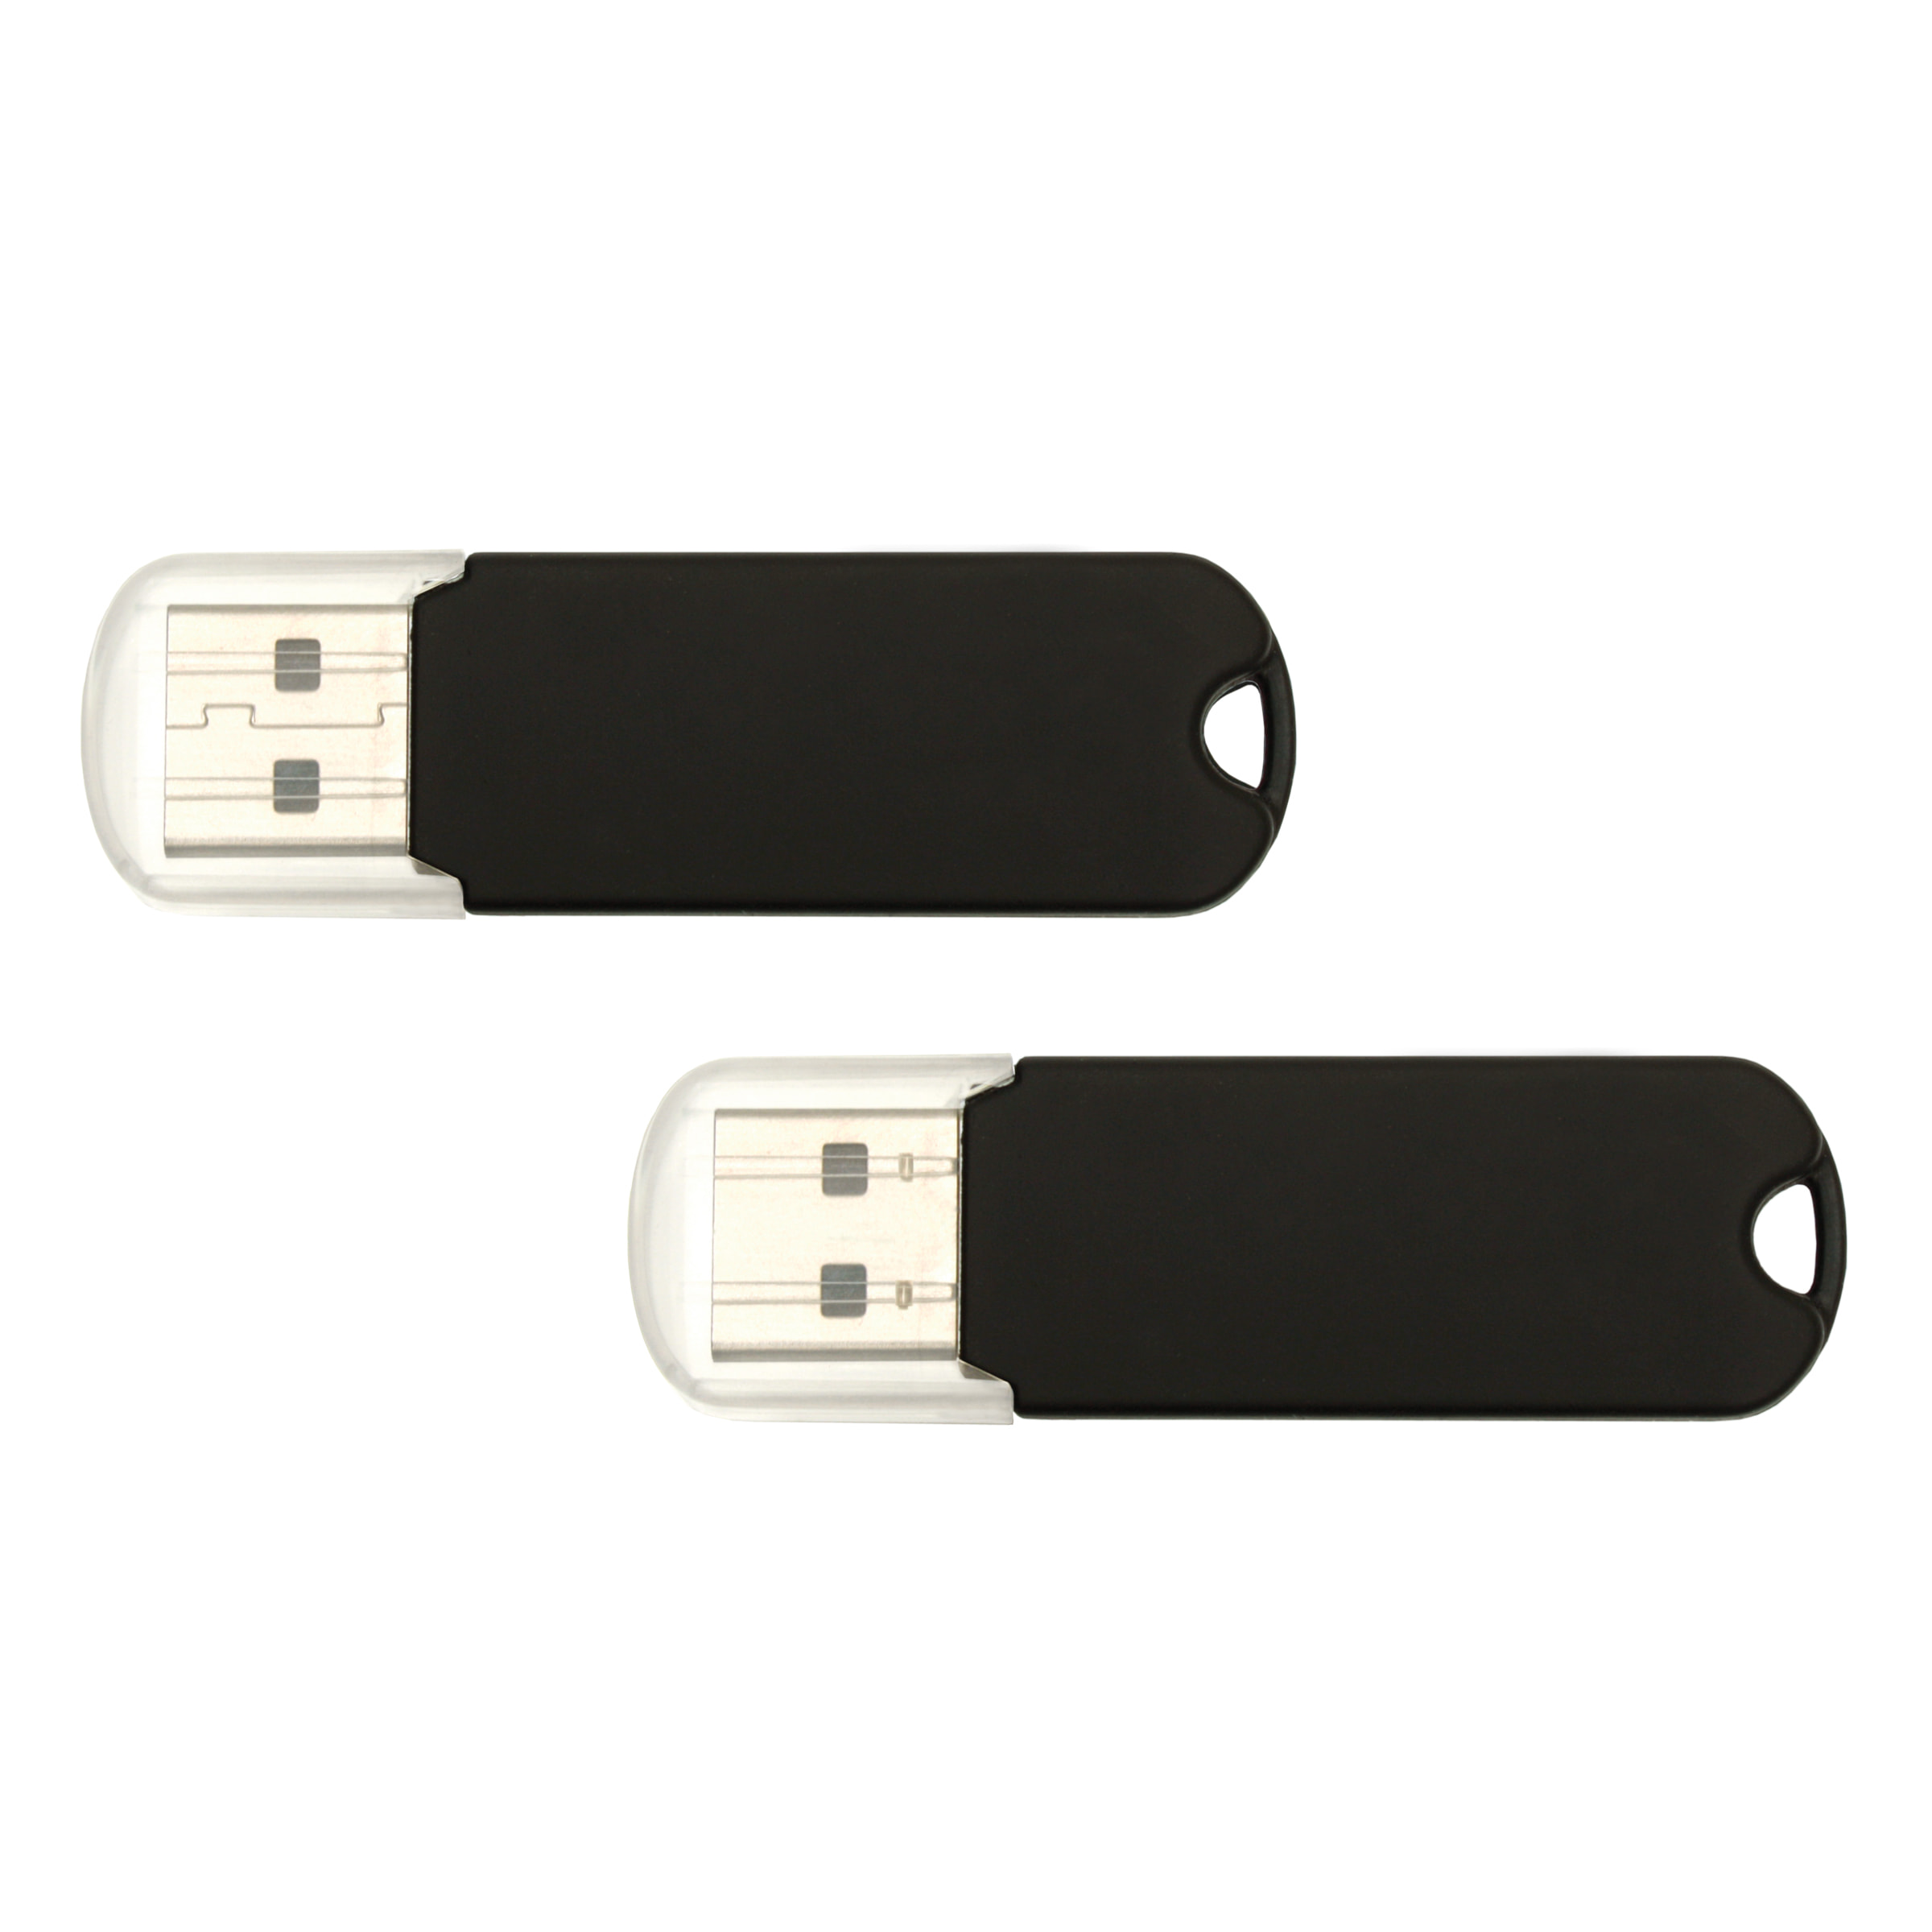 File name: USB-Spectra-3_0-Oscar-black.jpg
Dimensions: 2400 x 2400 pixels
File size: 217.45 KB